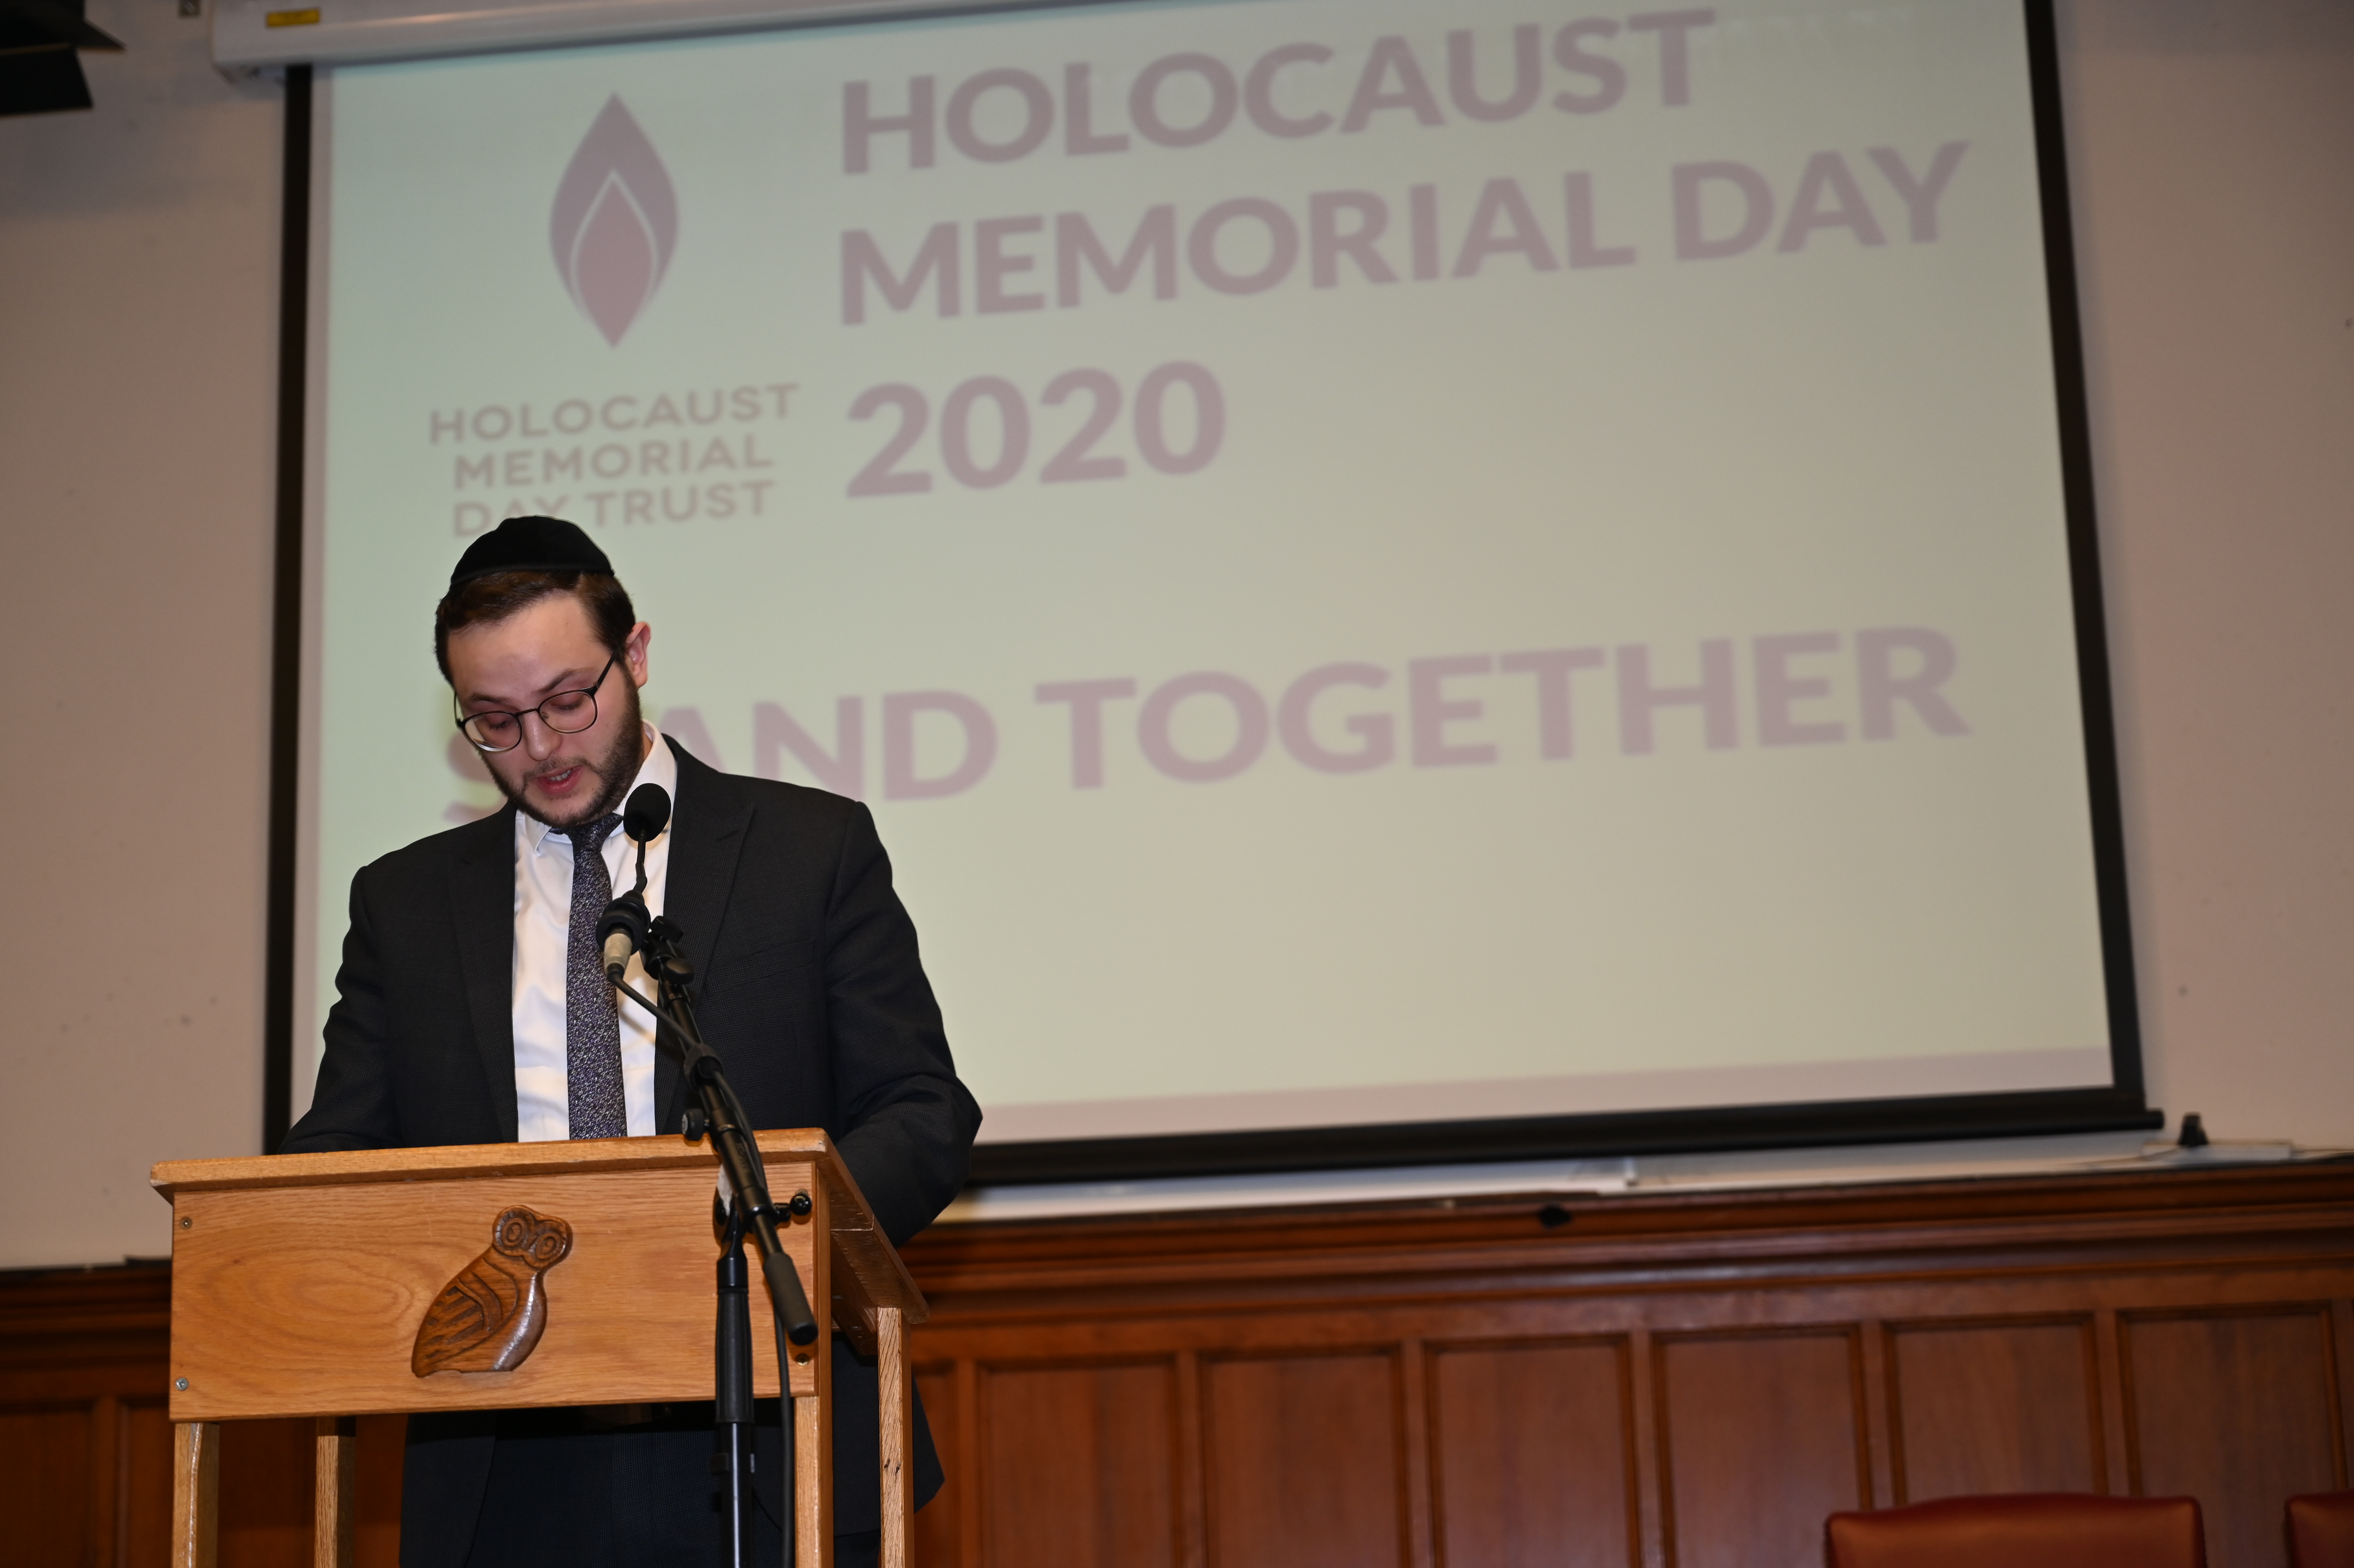 Revered Shmully Aronson speaking on Holocaust Memorial Day